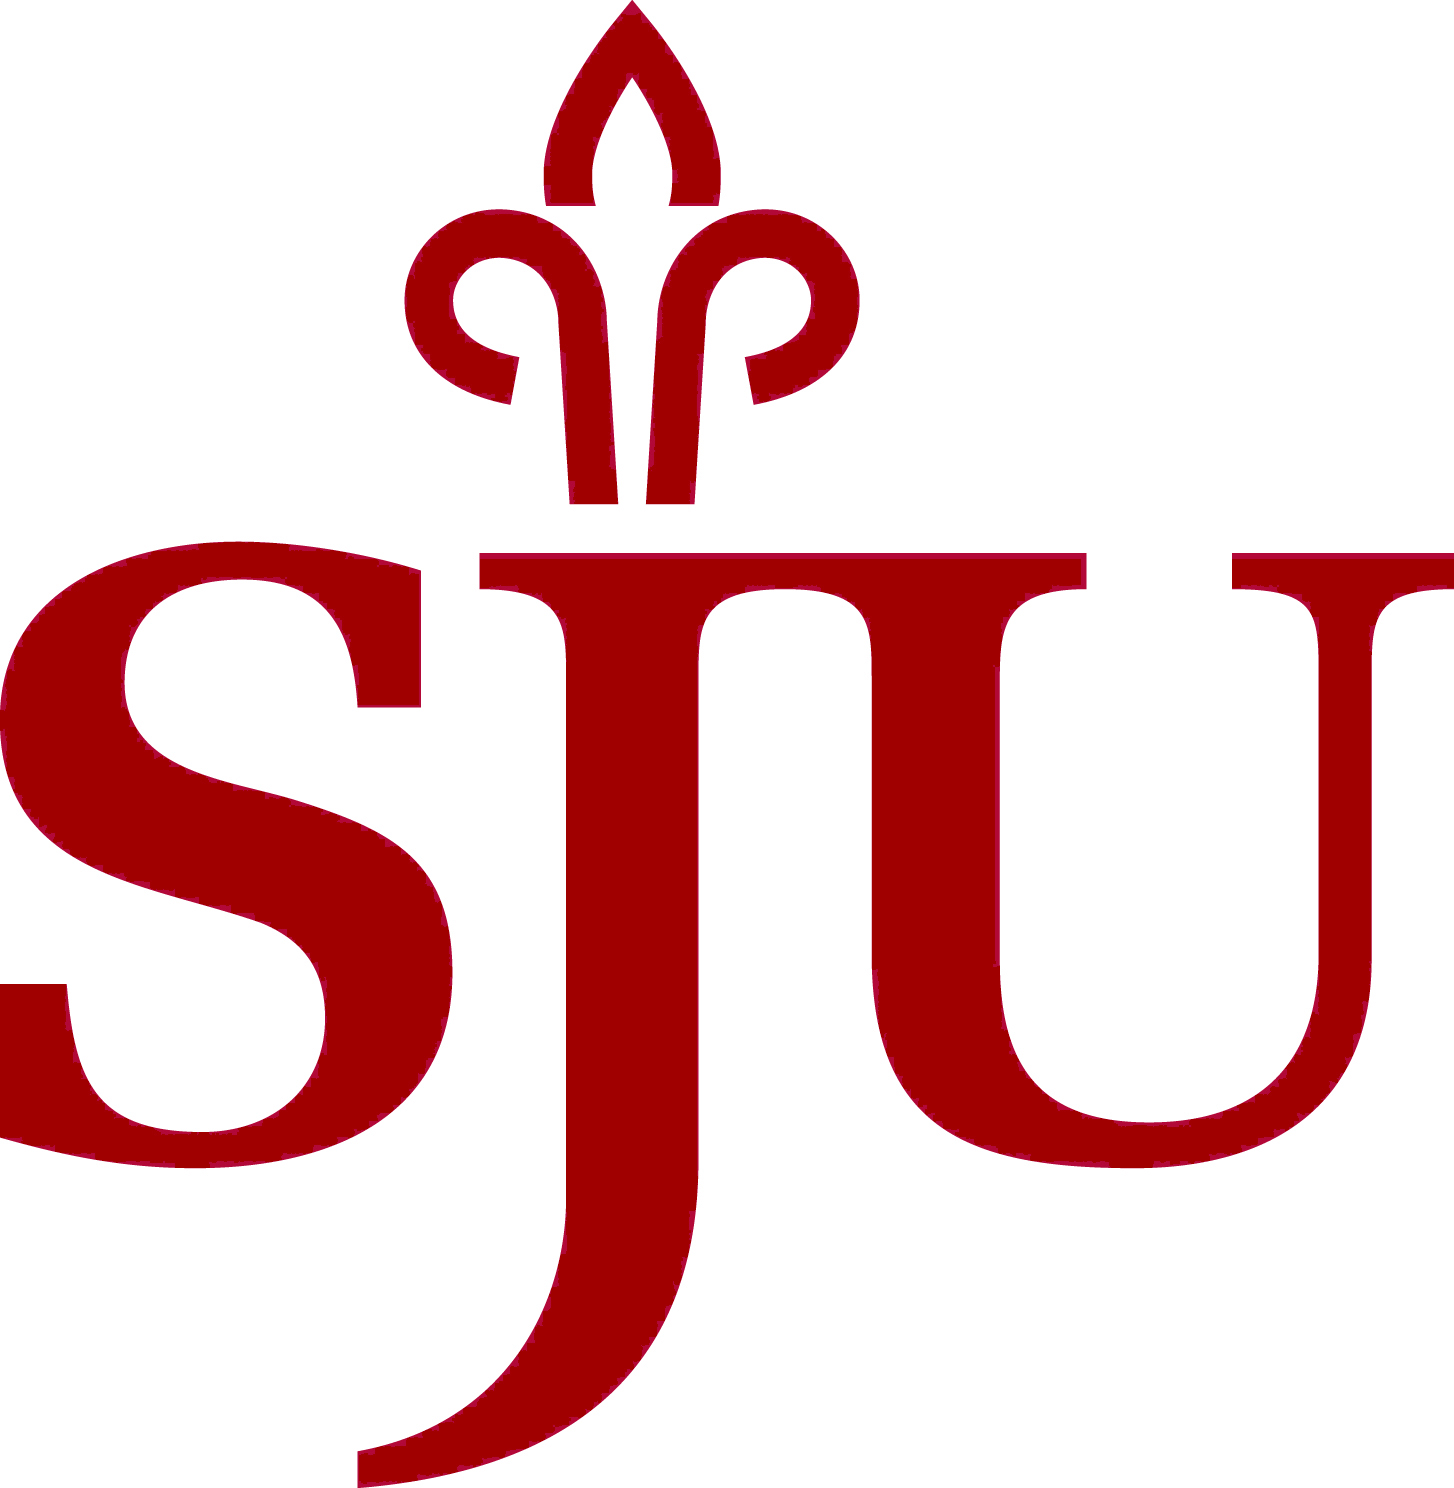 Image for The Jesuit Tradition at Saint Joseph's University webinar